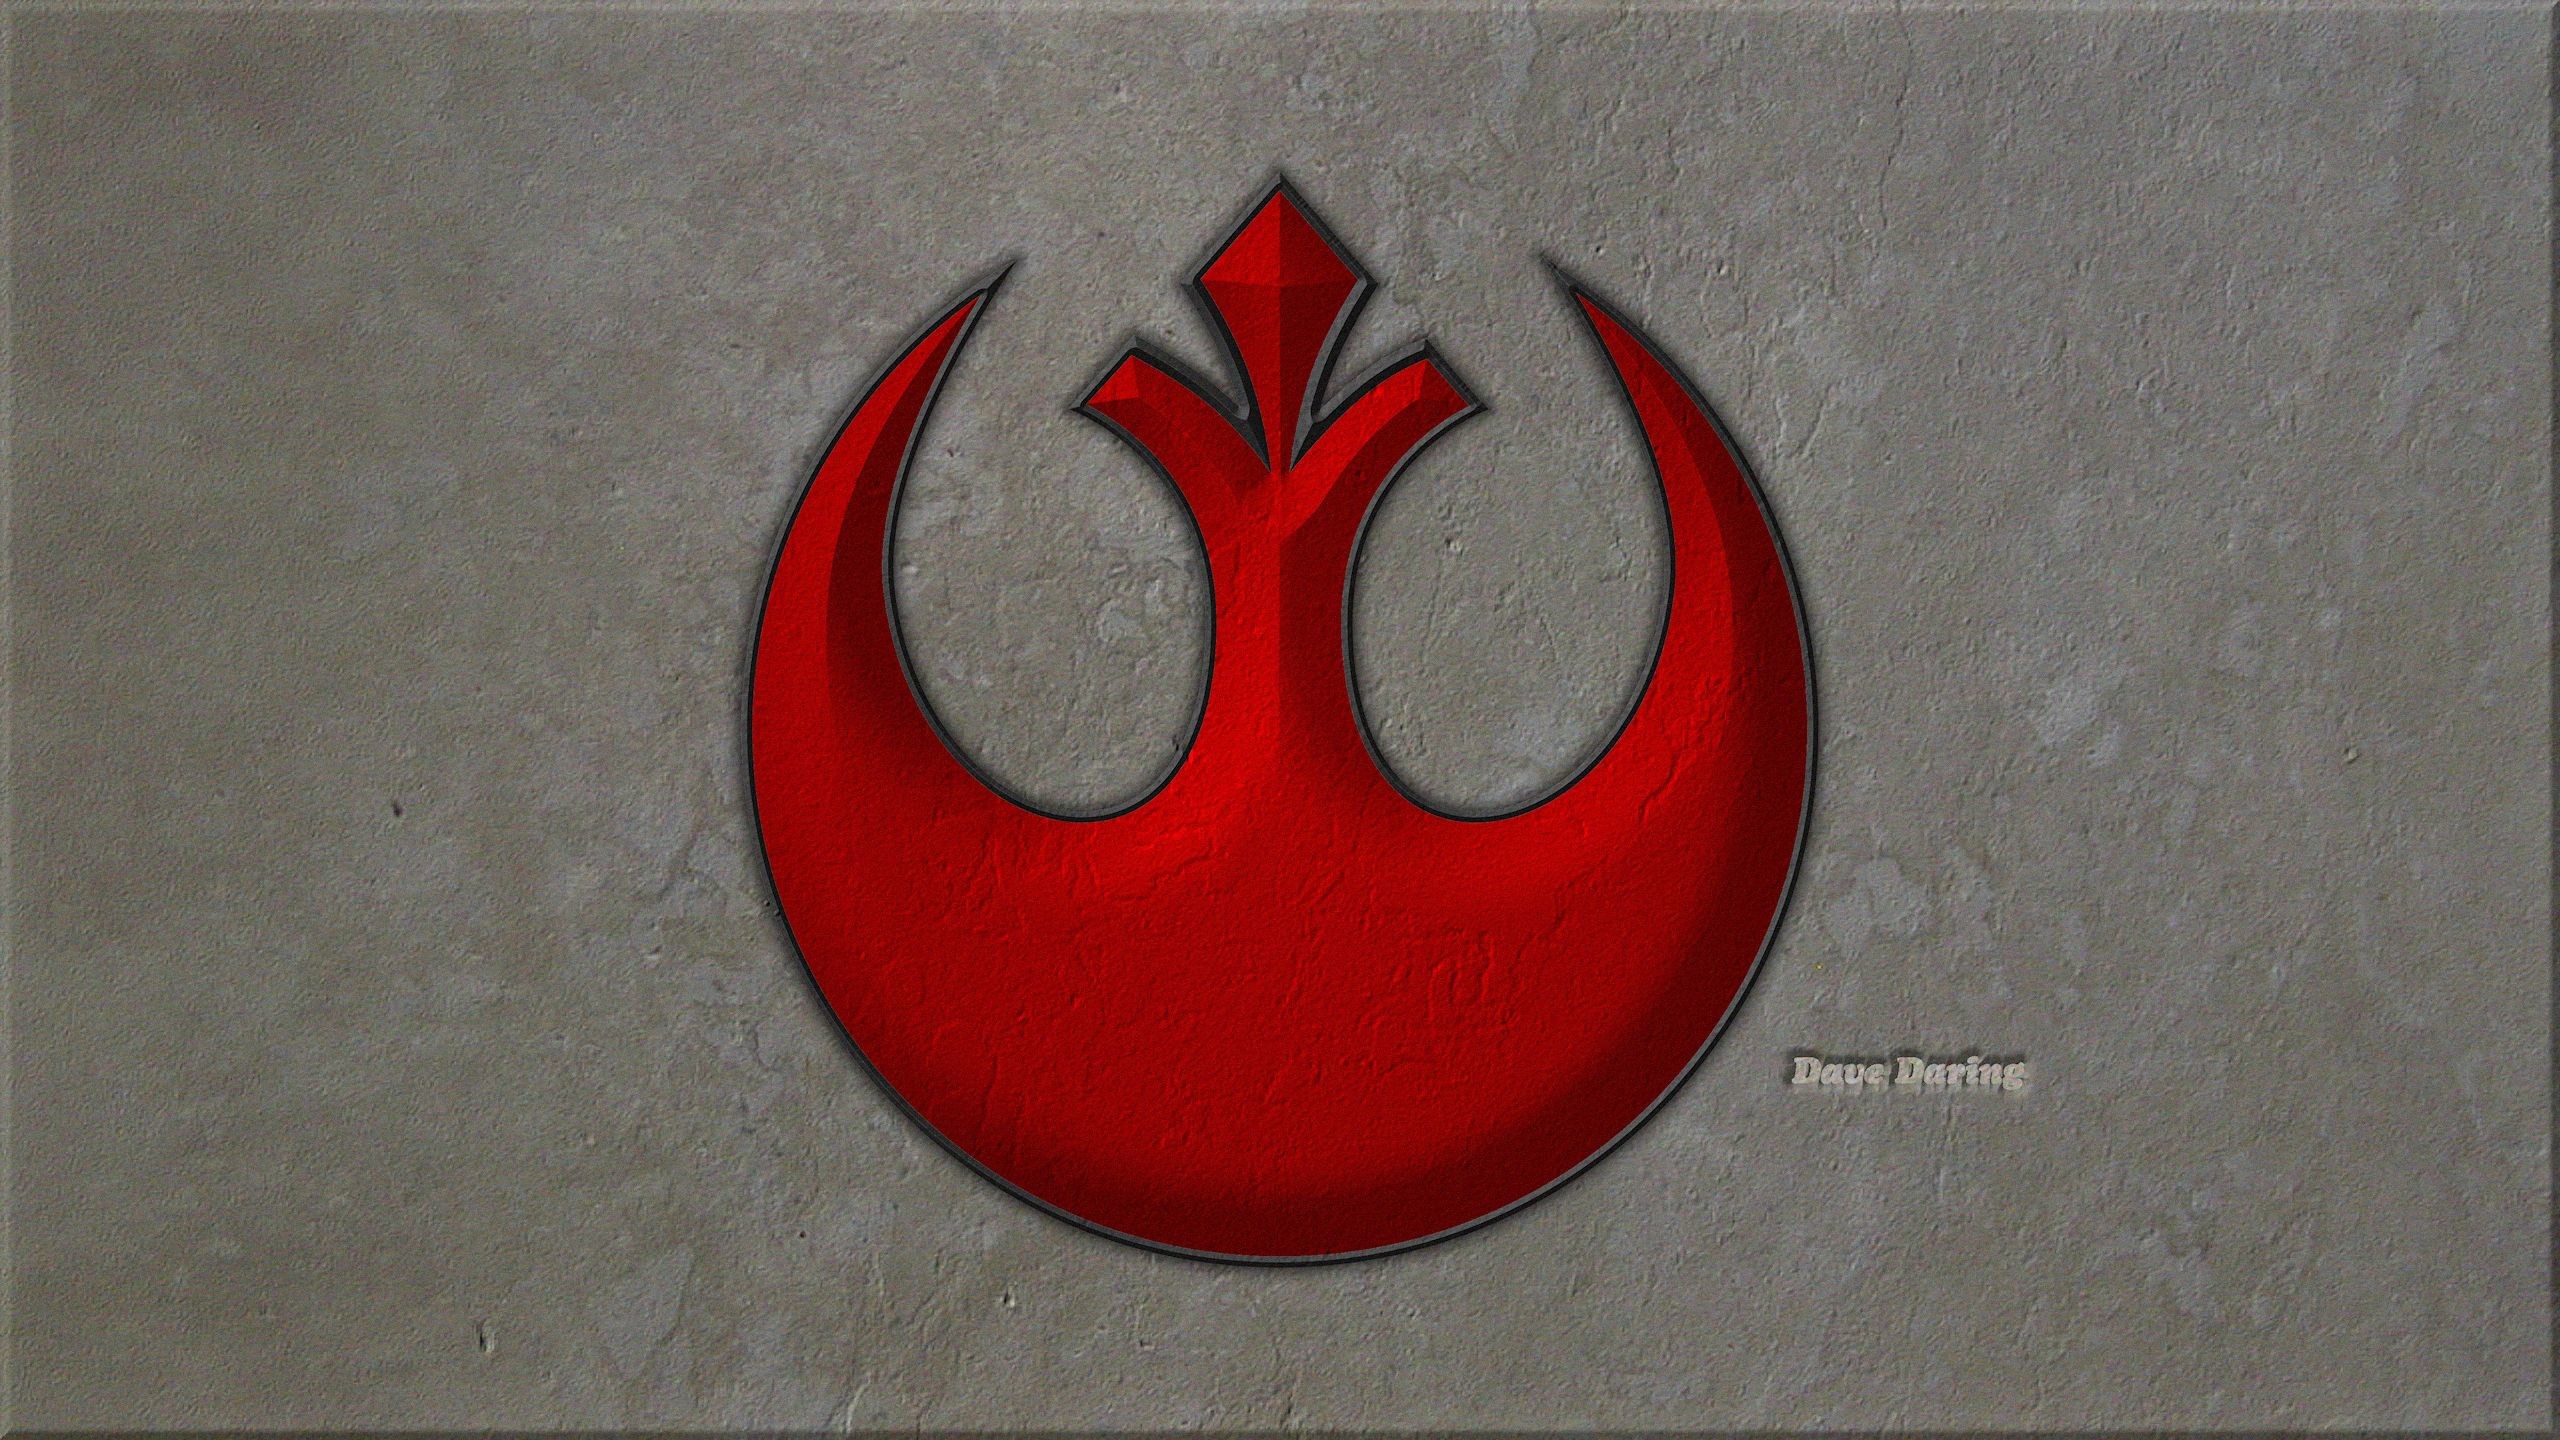 2560x1440 Rebel Alliance Logo Wallpaper Rebel alliance starbird symbol